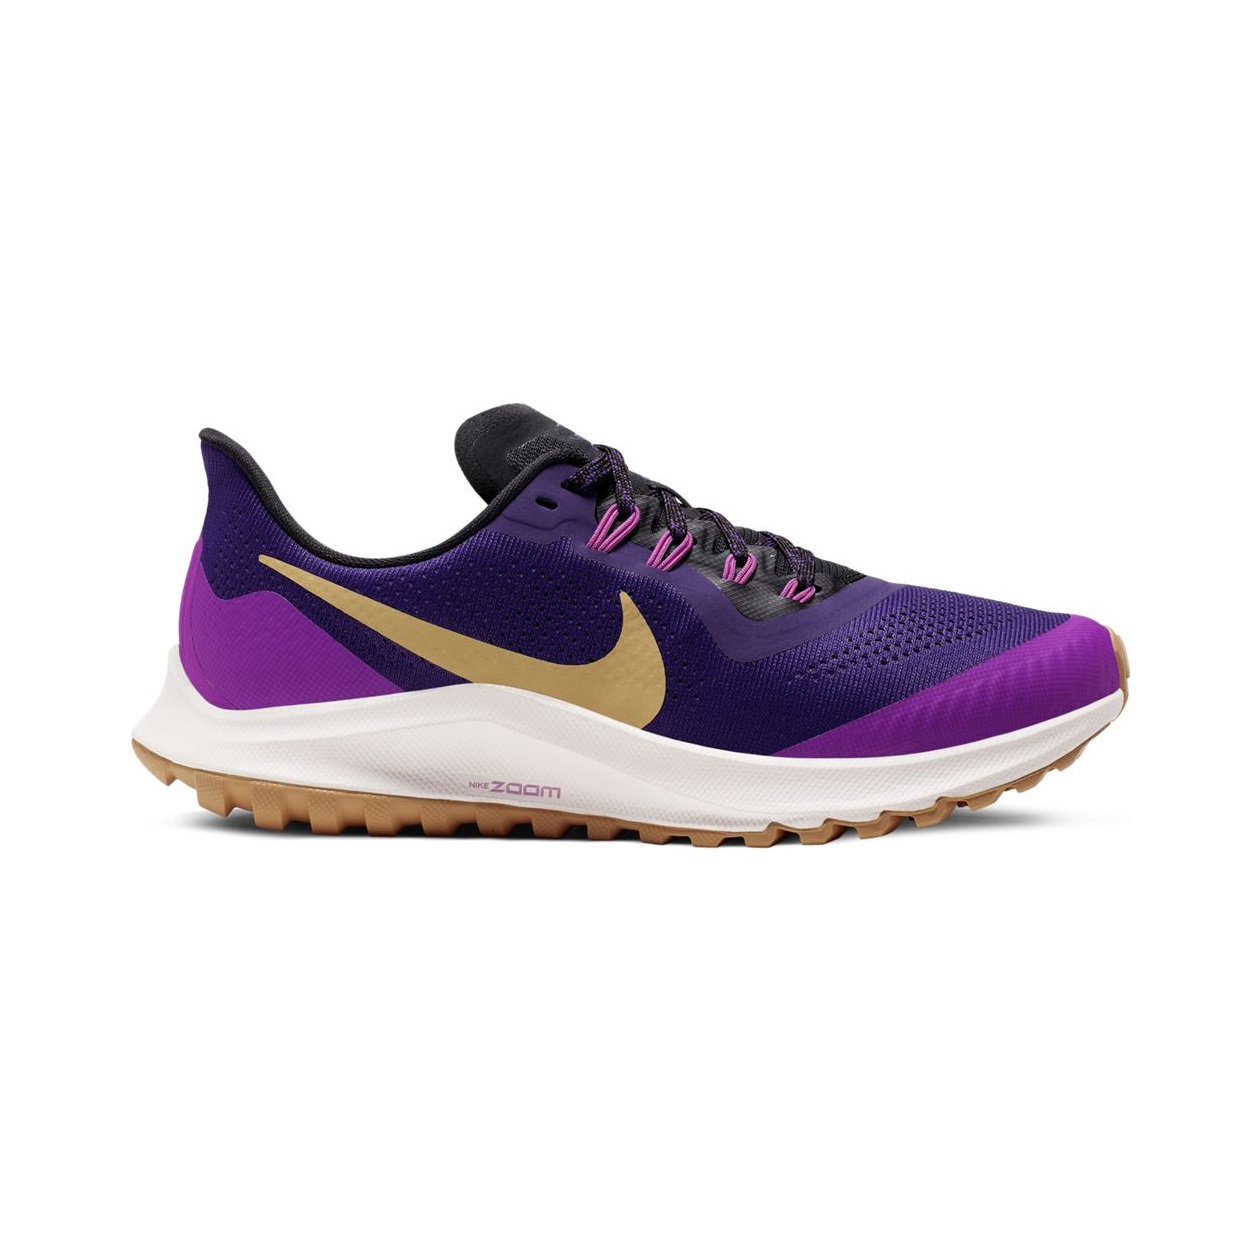 Zapatillas de trail running para mujer - Nike Air Zoom Pegasus 36 Trail - AR5676-500 | ferrersport.com Tienda online de